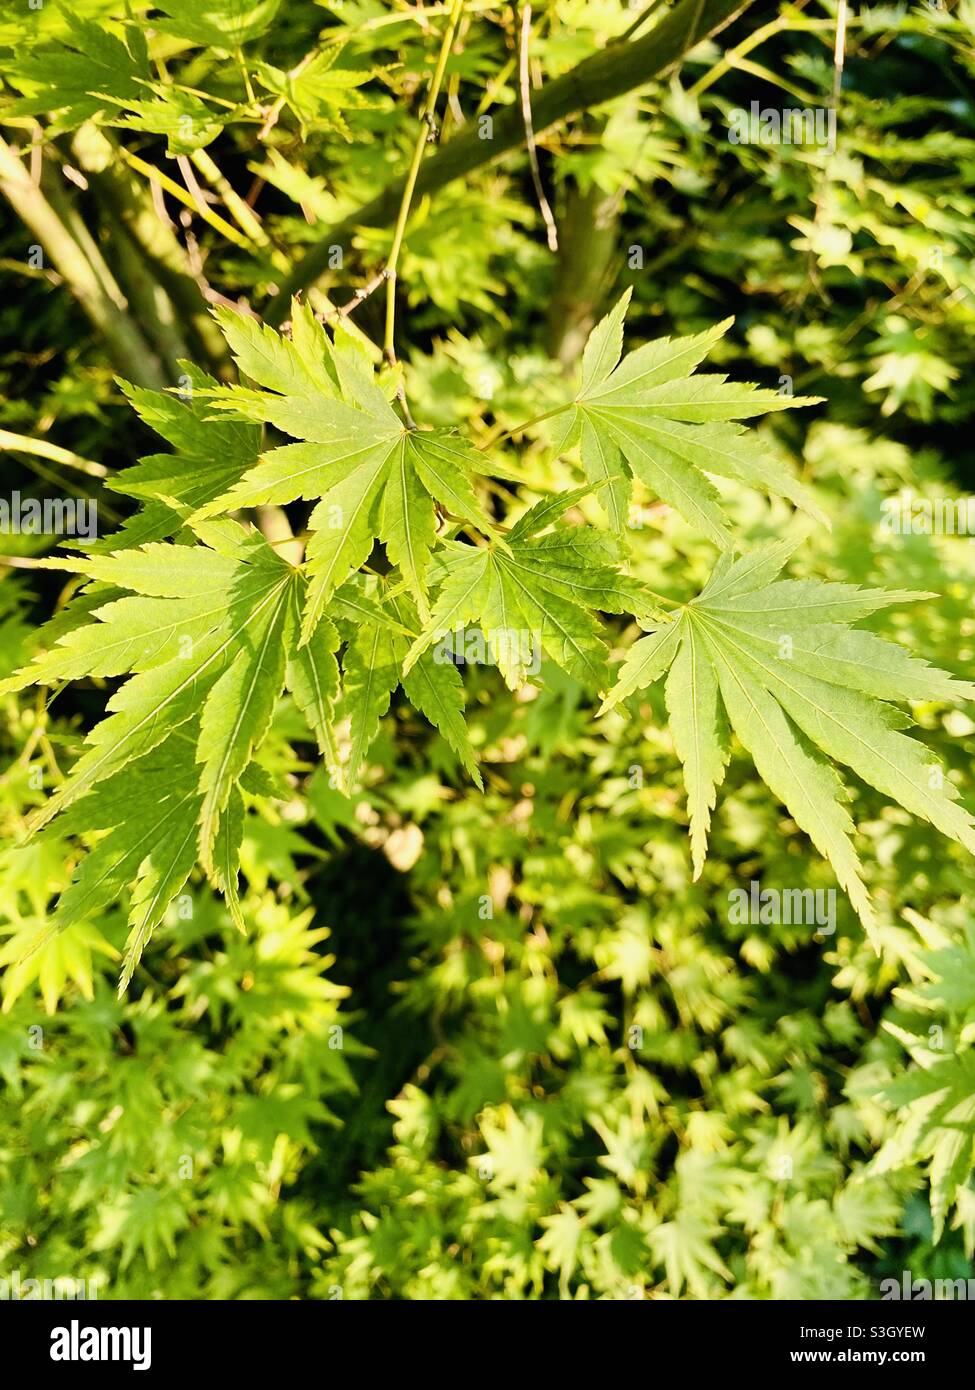 Japanese maple tree leaves in the summer sunlight Stock Photo